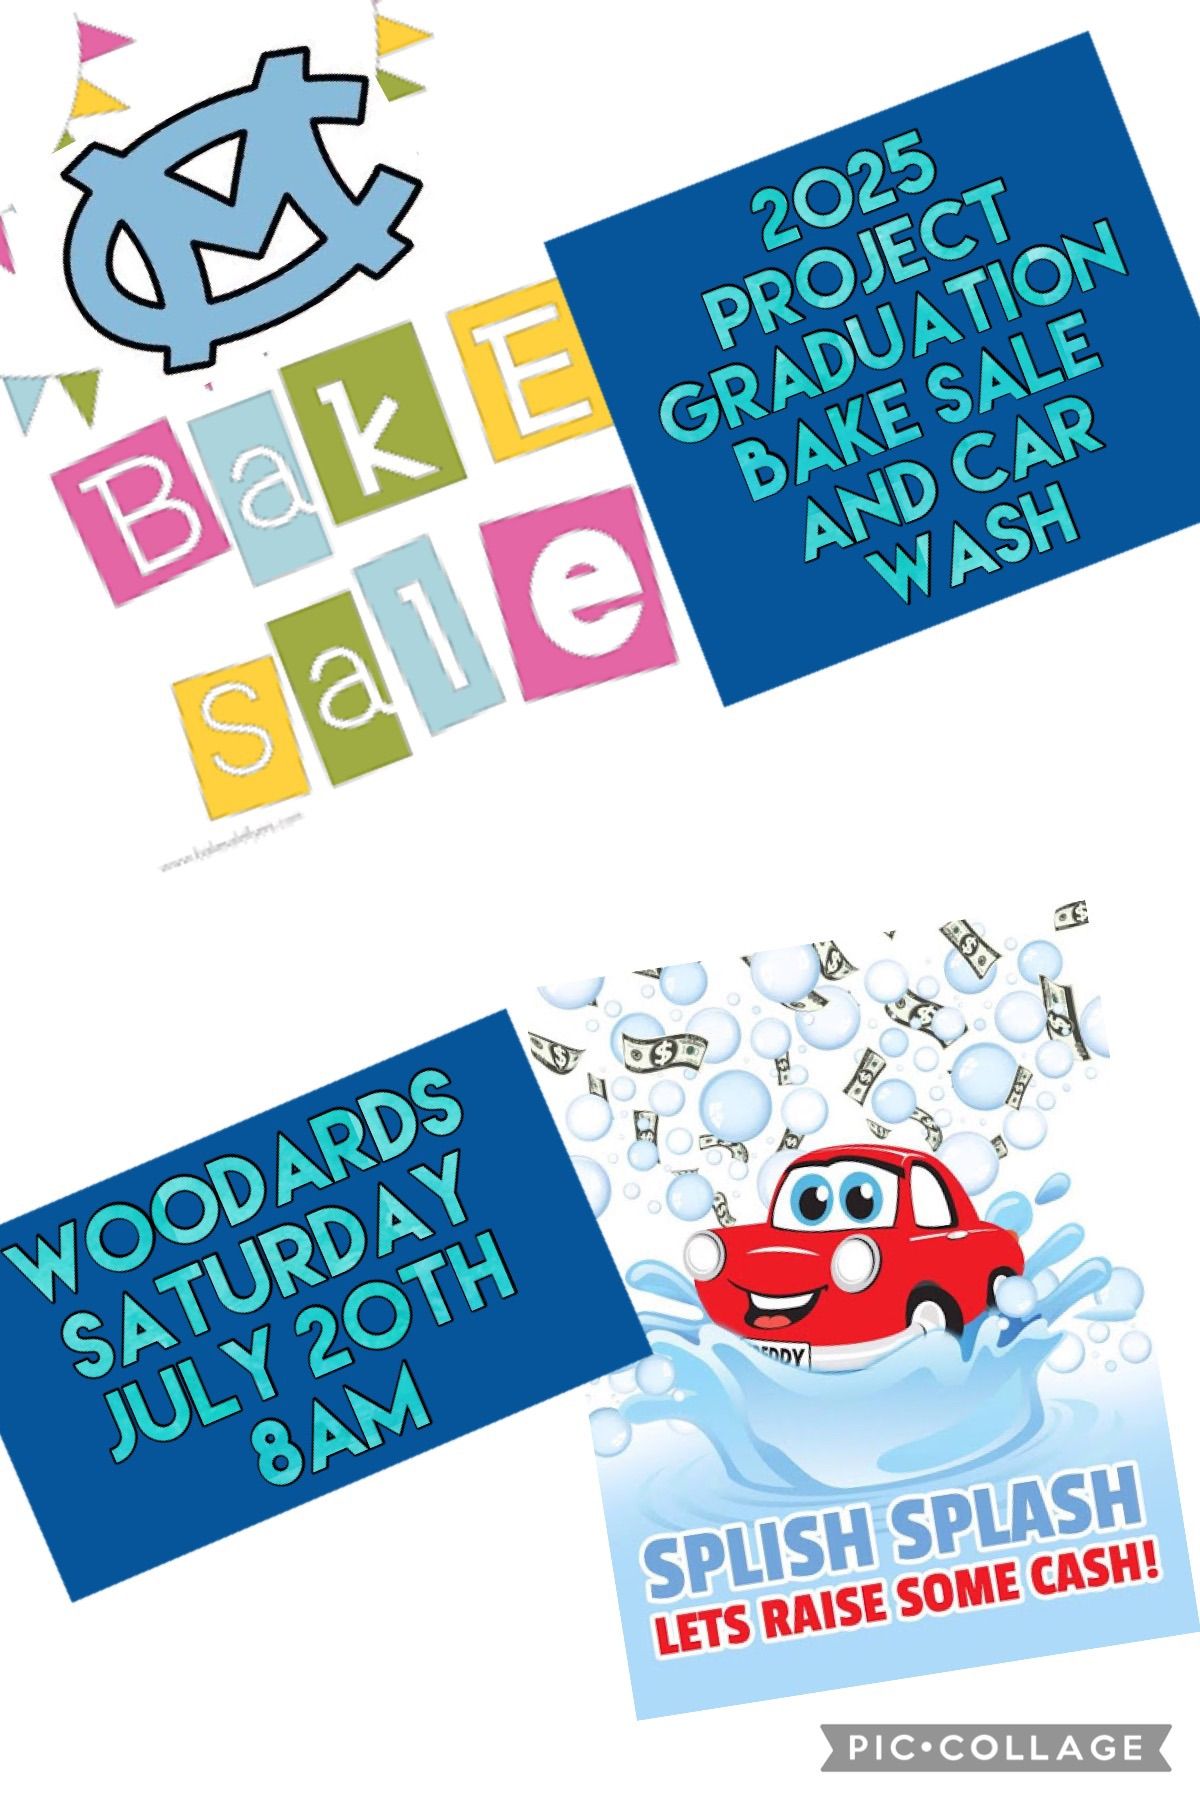 Bake Sale and Car Wash 